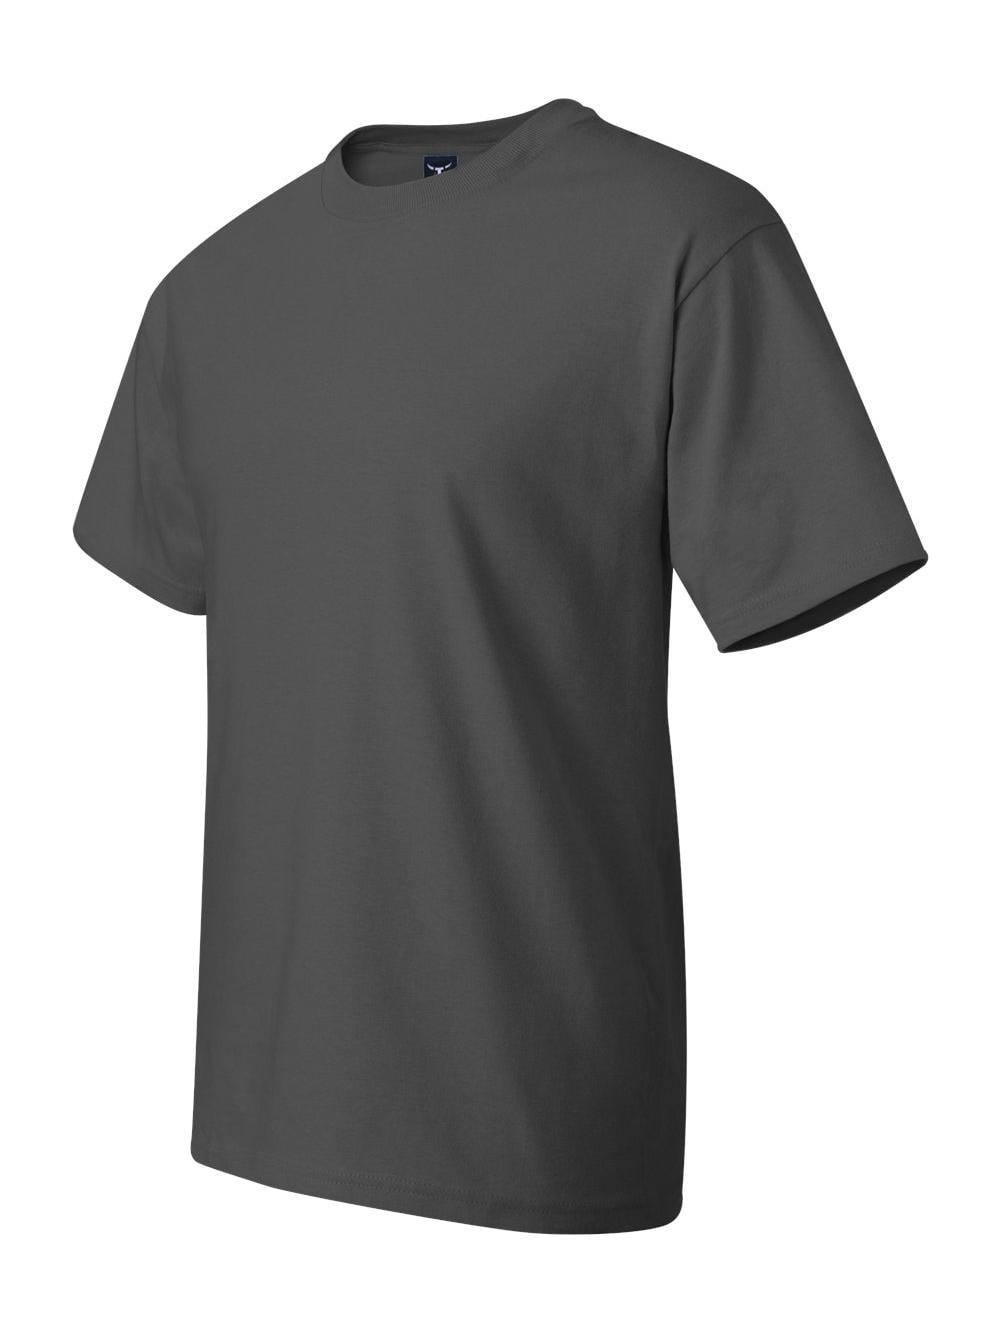 Hanes - Beefy-T T-Shirt - 5180 - Charcoal Heather - Size: 5XL - Walmart.com